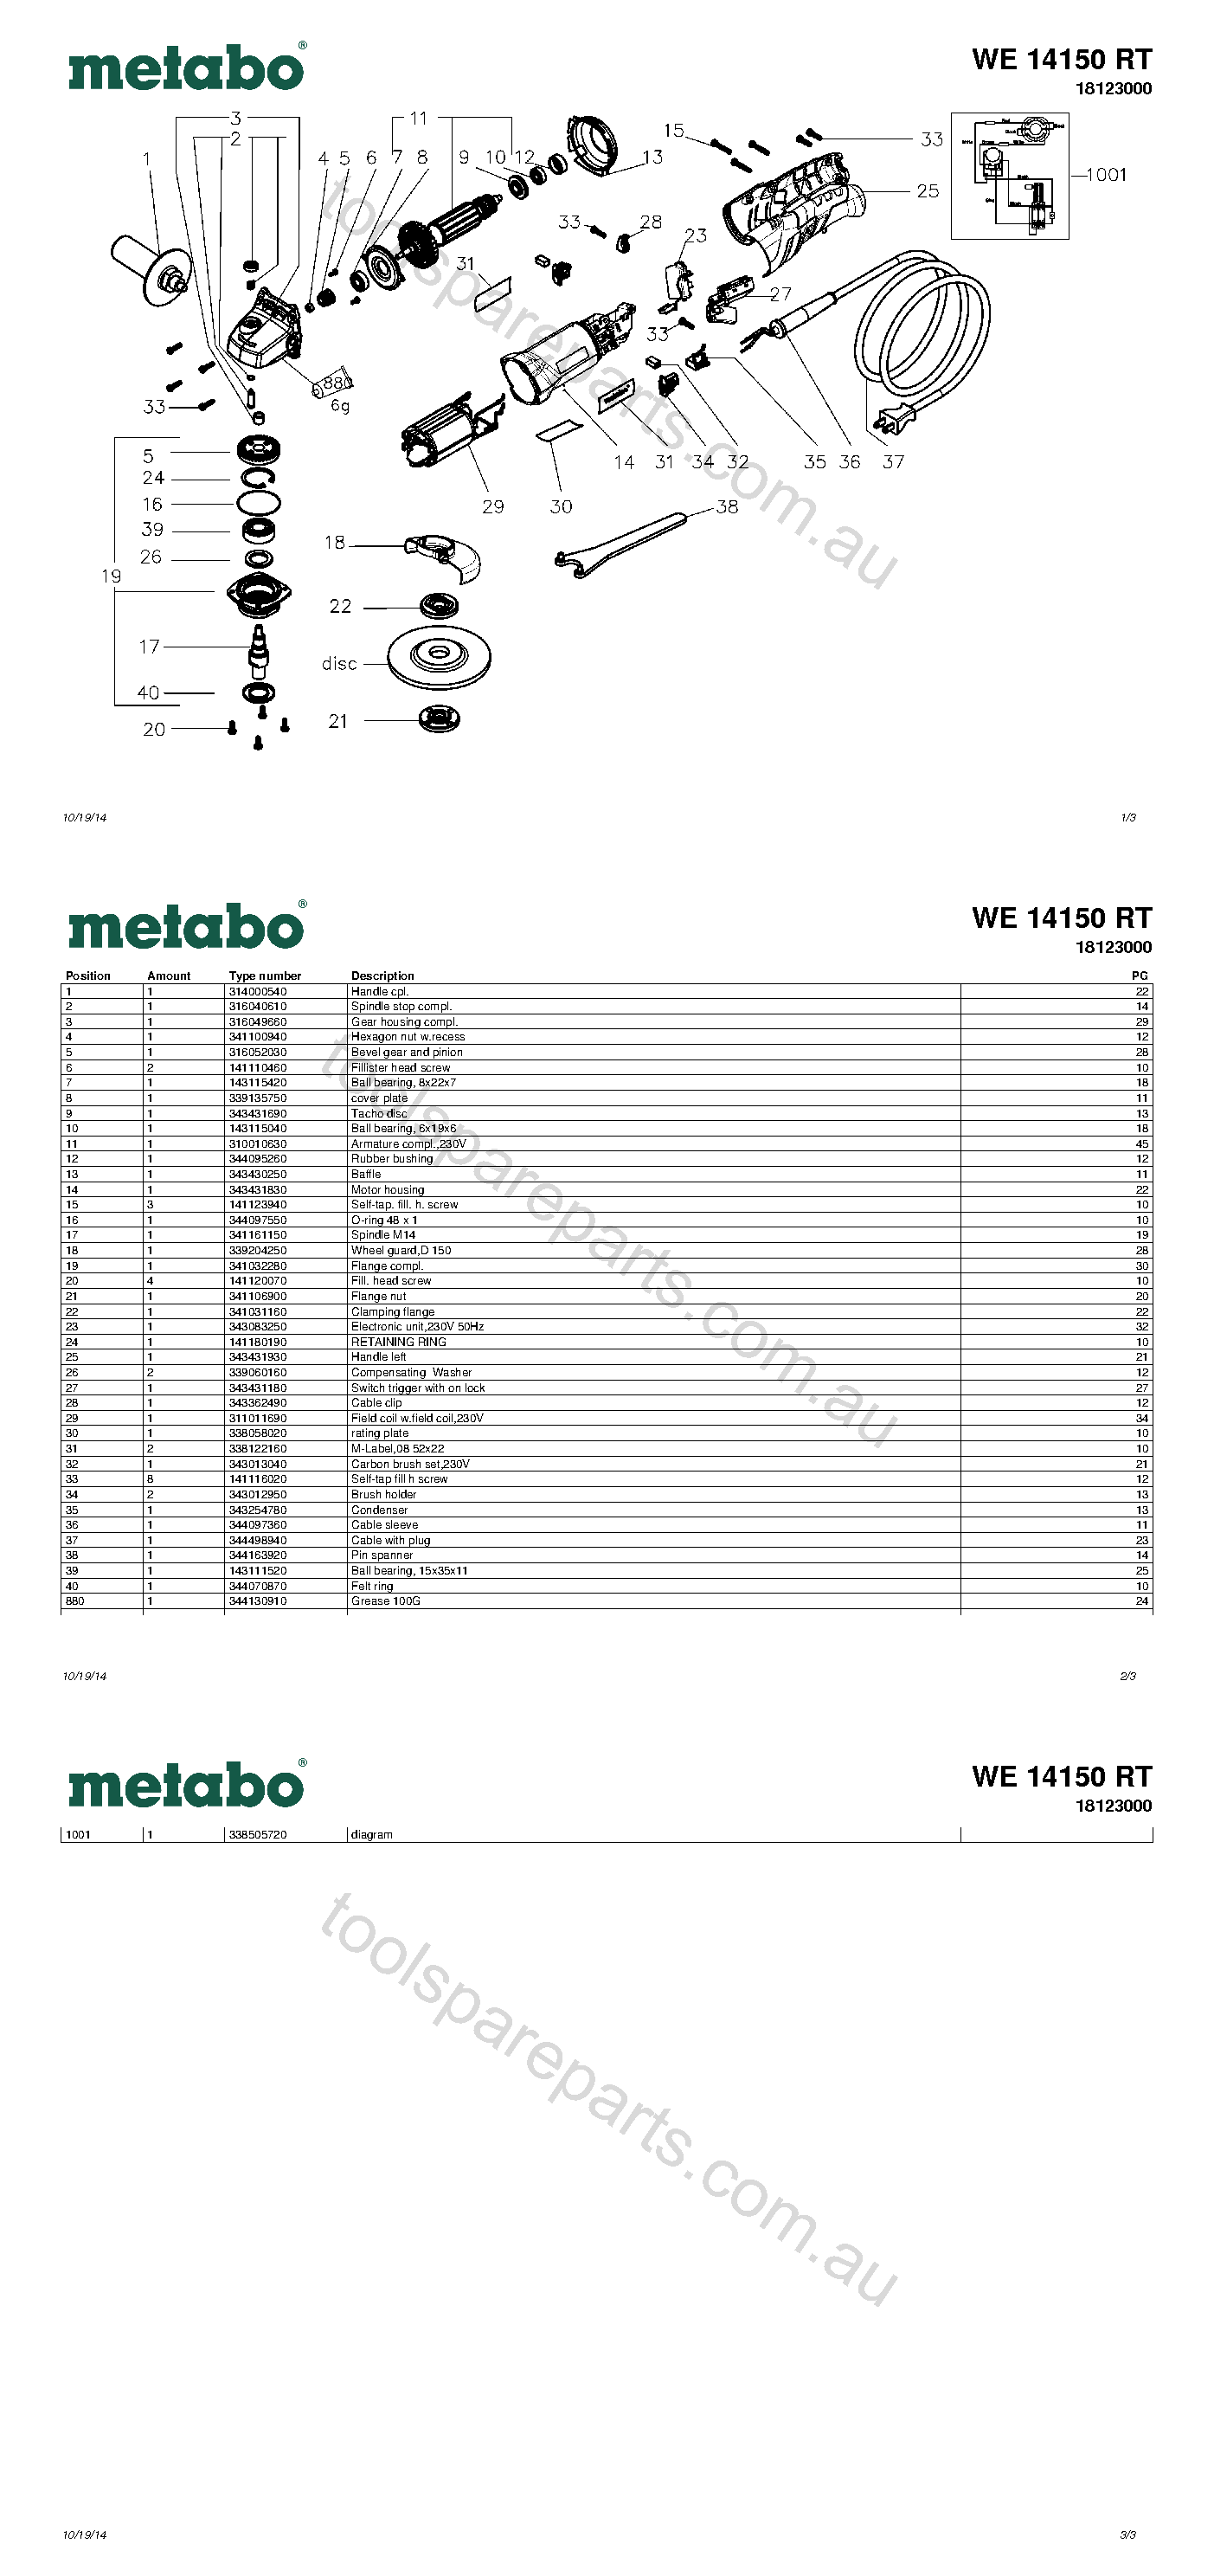 Metabo WE 14150 RT 18123000  Diagram 1